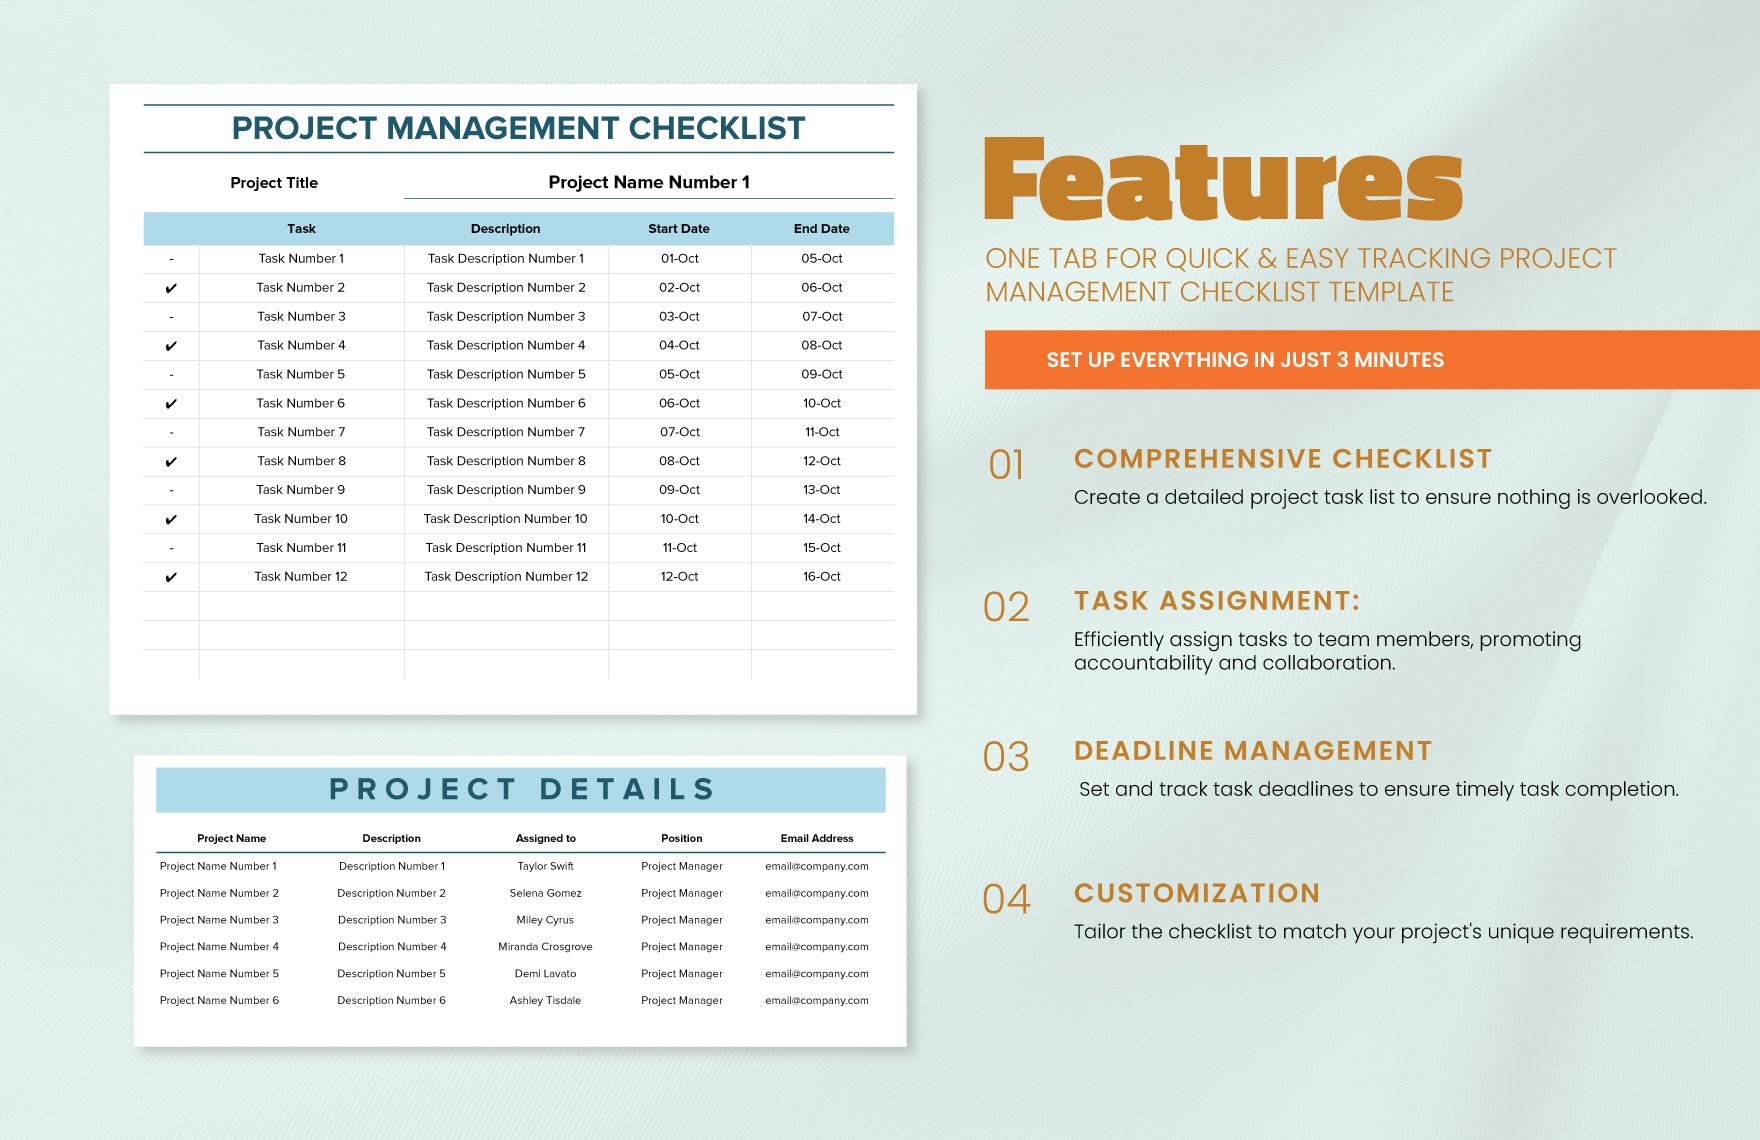 Project Management Checklist Template